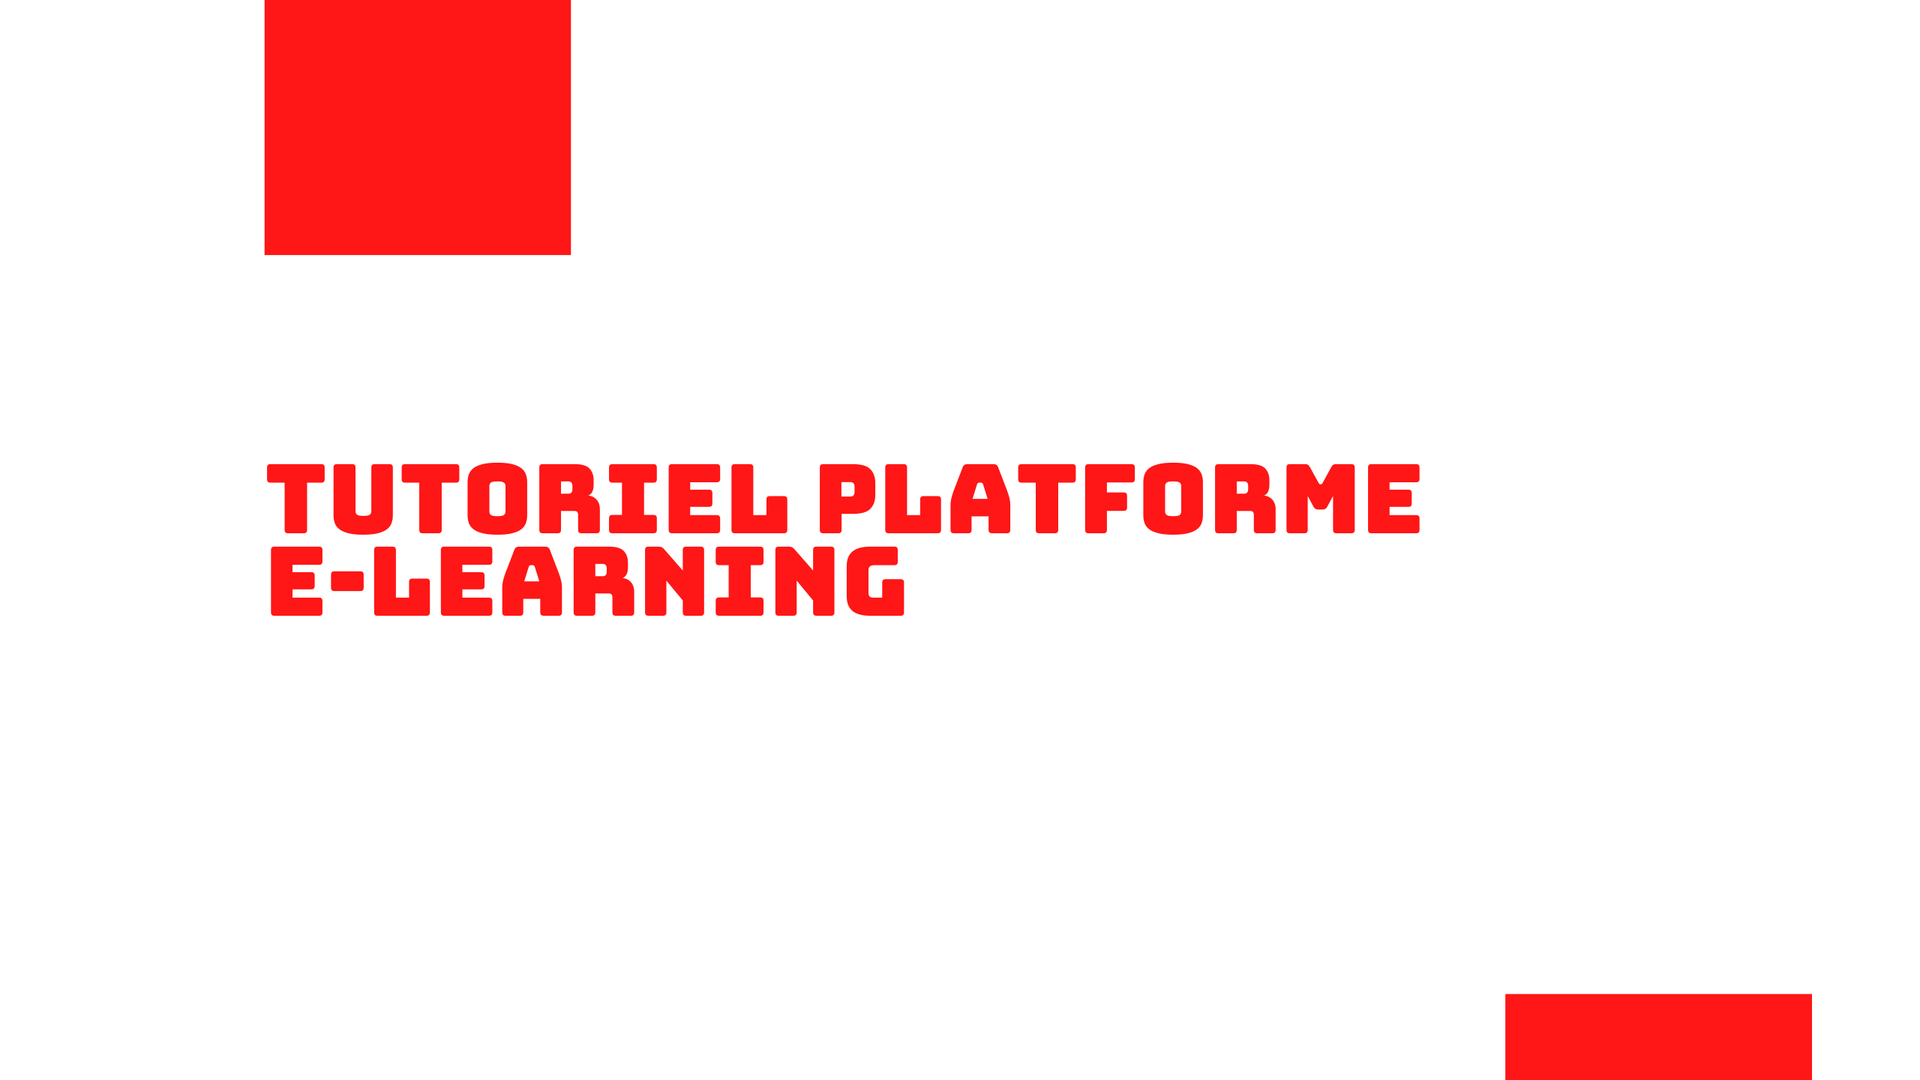 Tutoriel Platforme E-Learning